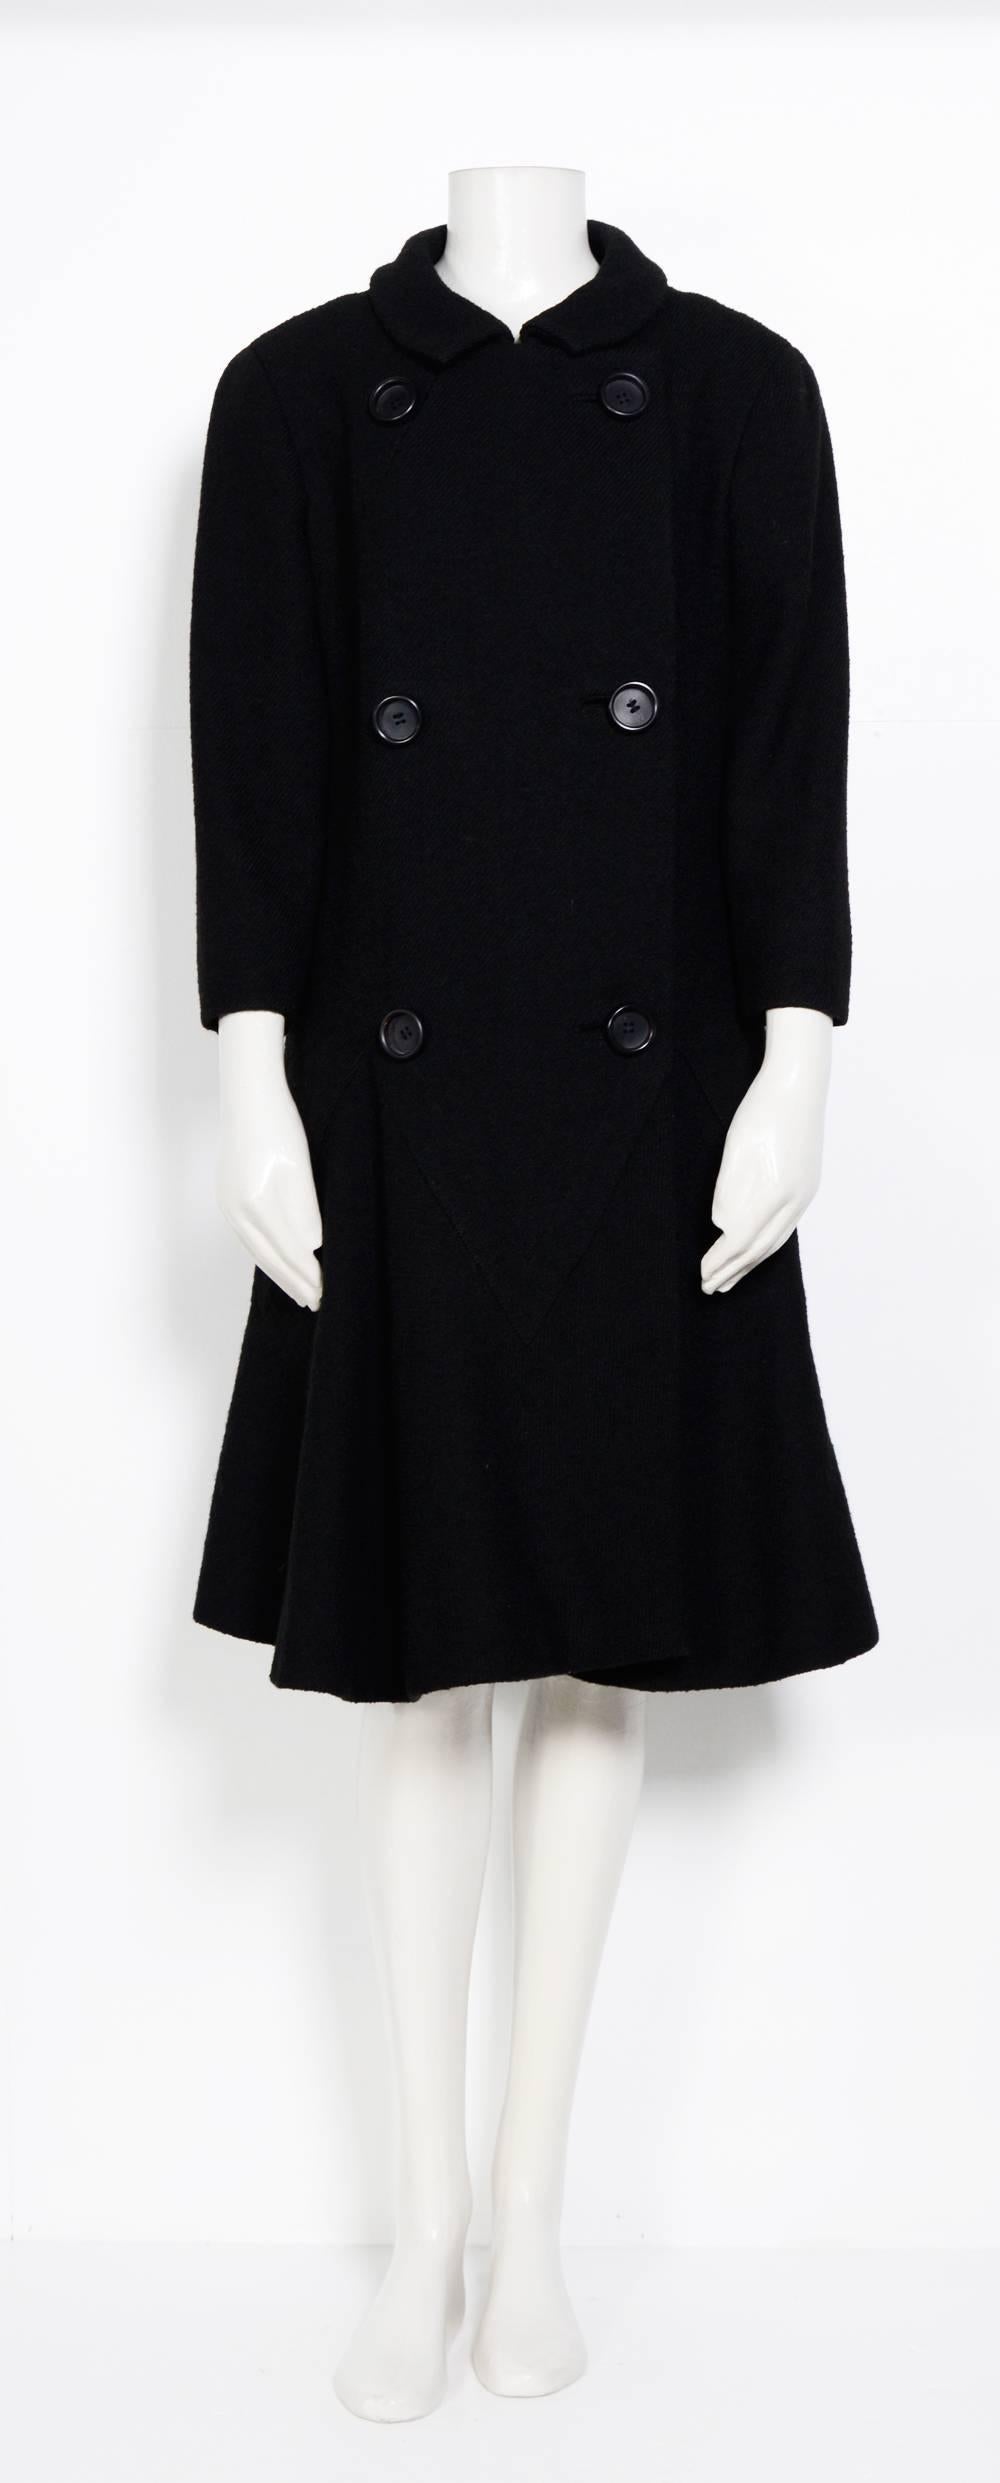 Vintage 1960s elegant coat by Pierre Cardin Creation. 
Made in a black wool boucle fabric.
Measurements taken flat : Sh 17inch/43cm - Ua 20,5inch/52cm - Waist 20inch/51cm - Hip 21inch/53cm - Total Length 39inch/99cm - Sleeve 19inch/48cm
